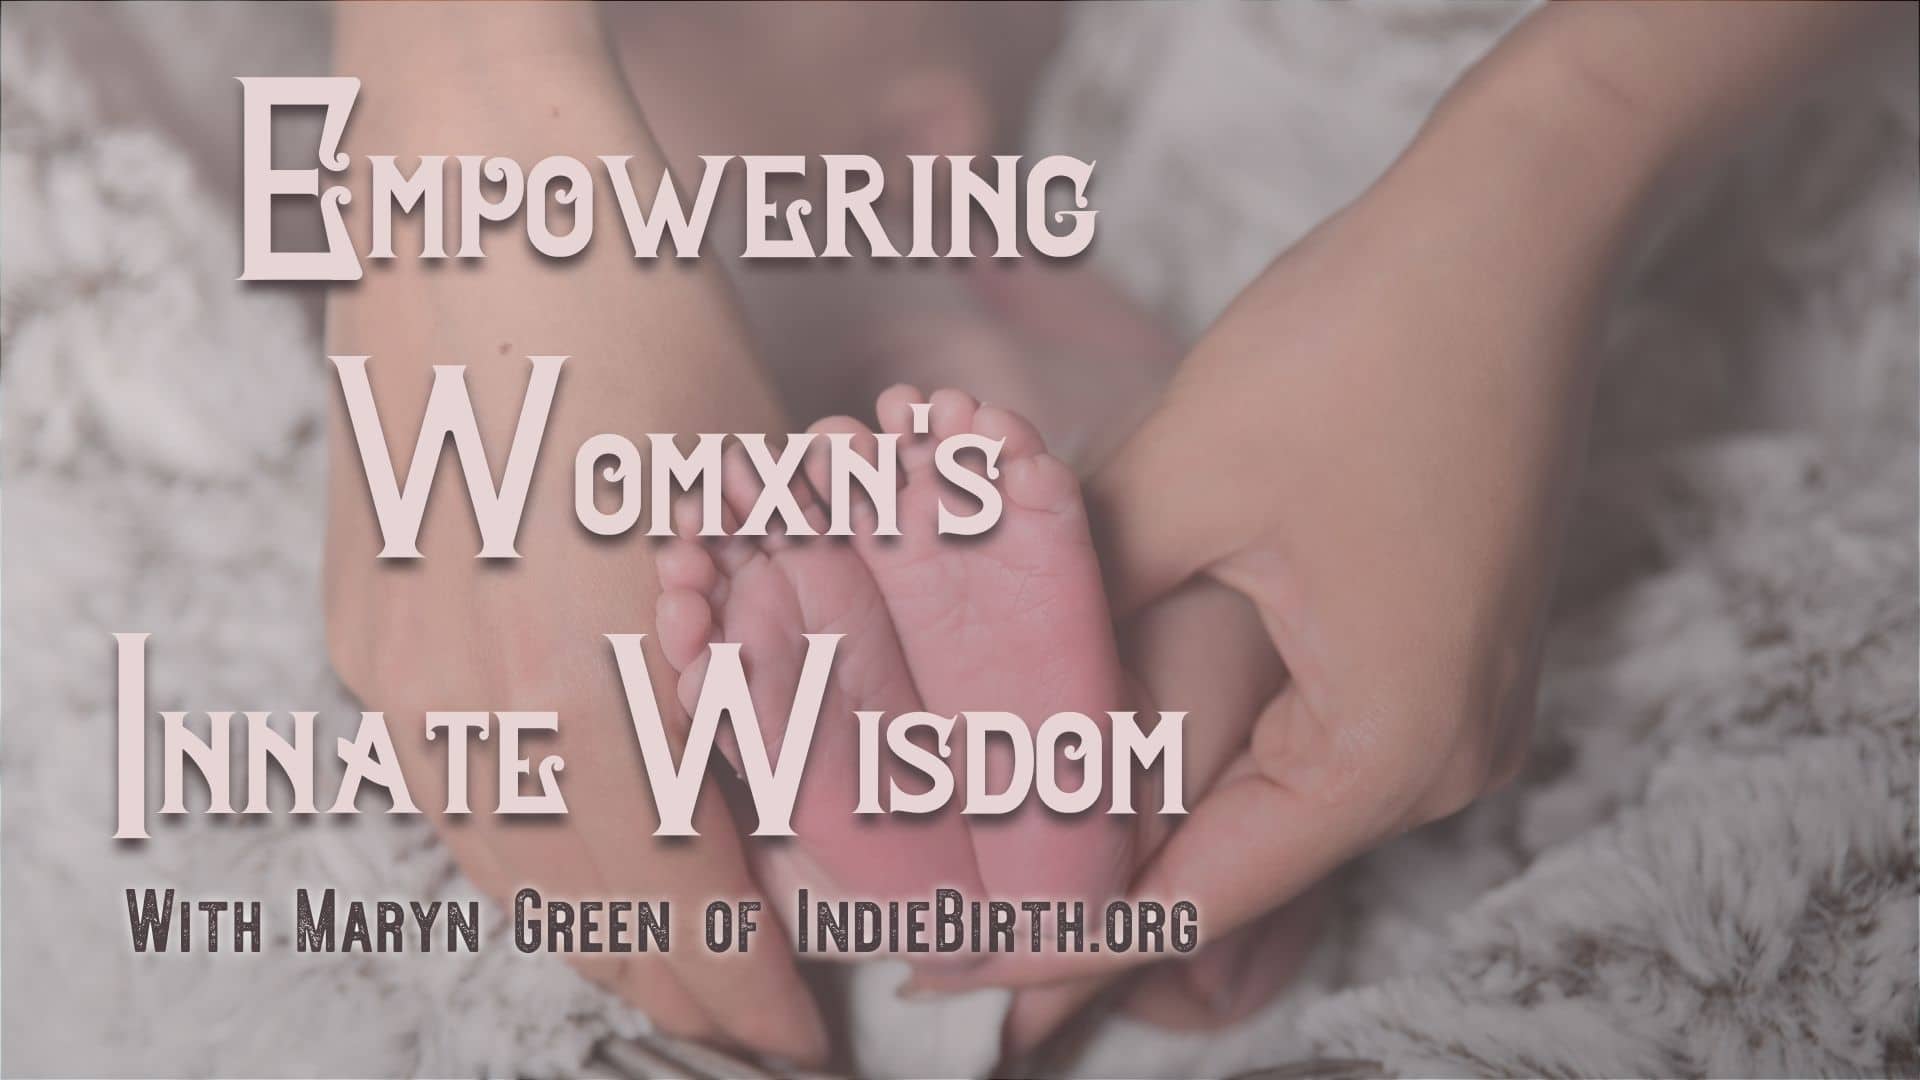 Empowering Womxn's Innate Wisdom